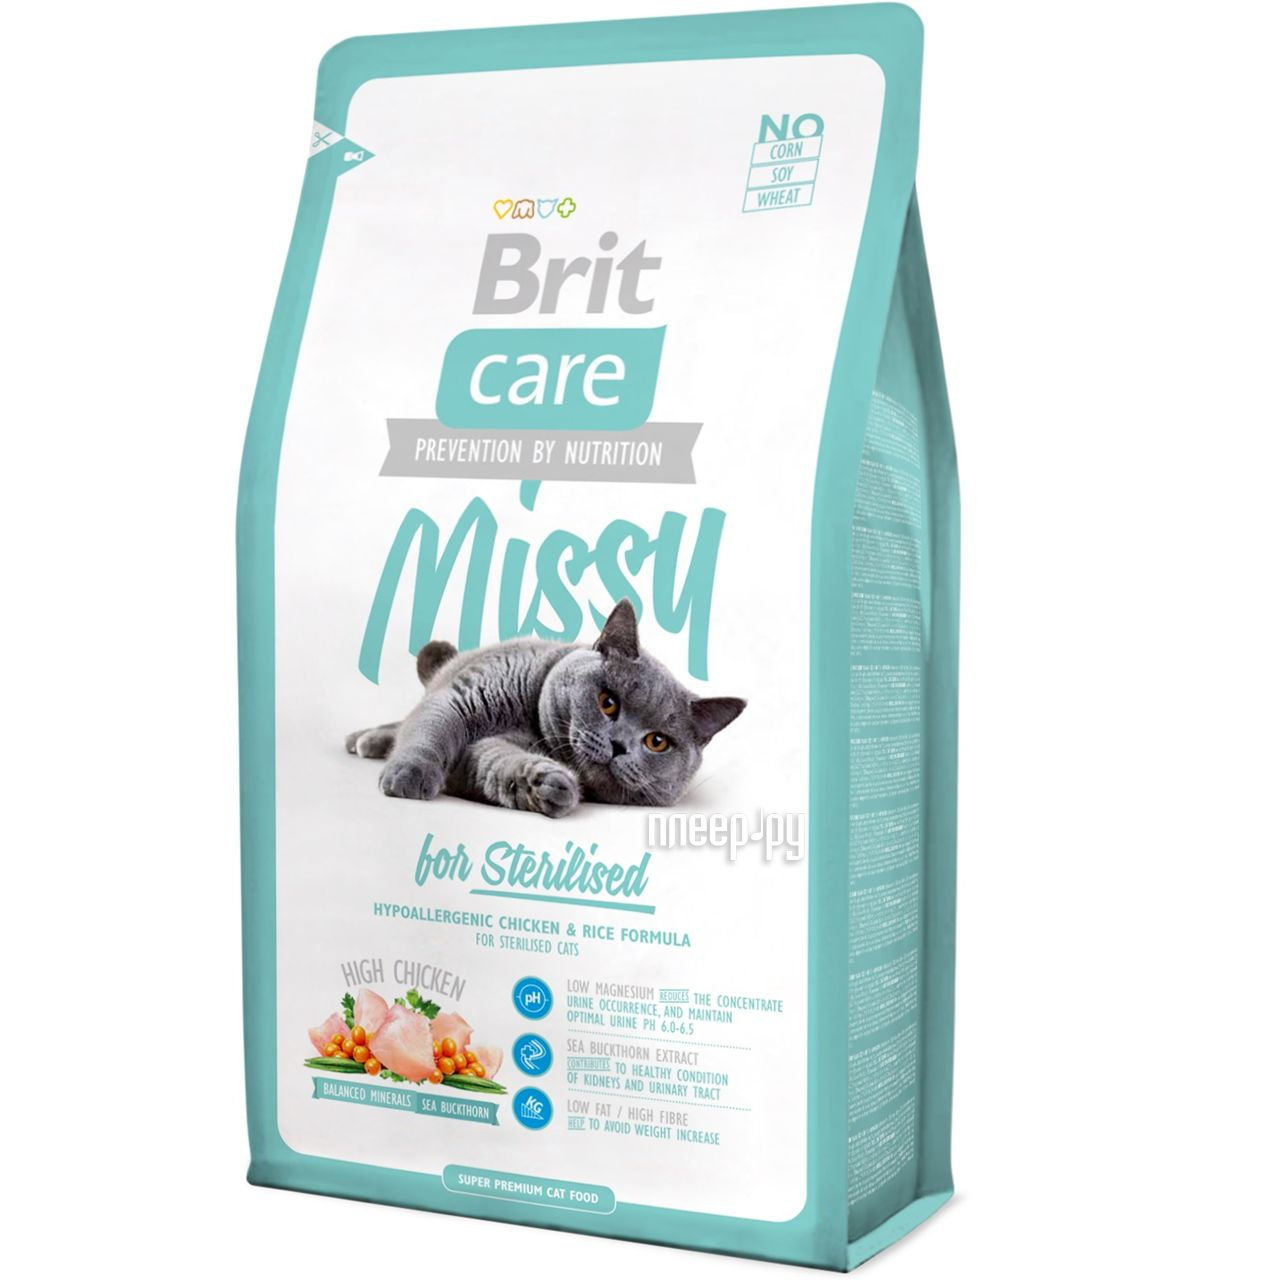  Brit Care Cat Missy for Sterilised 2kg   132625 / 103301 / 05739 